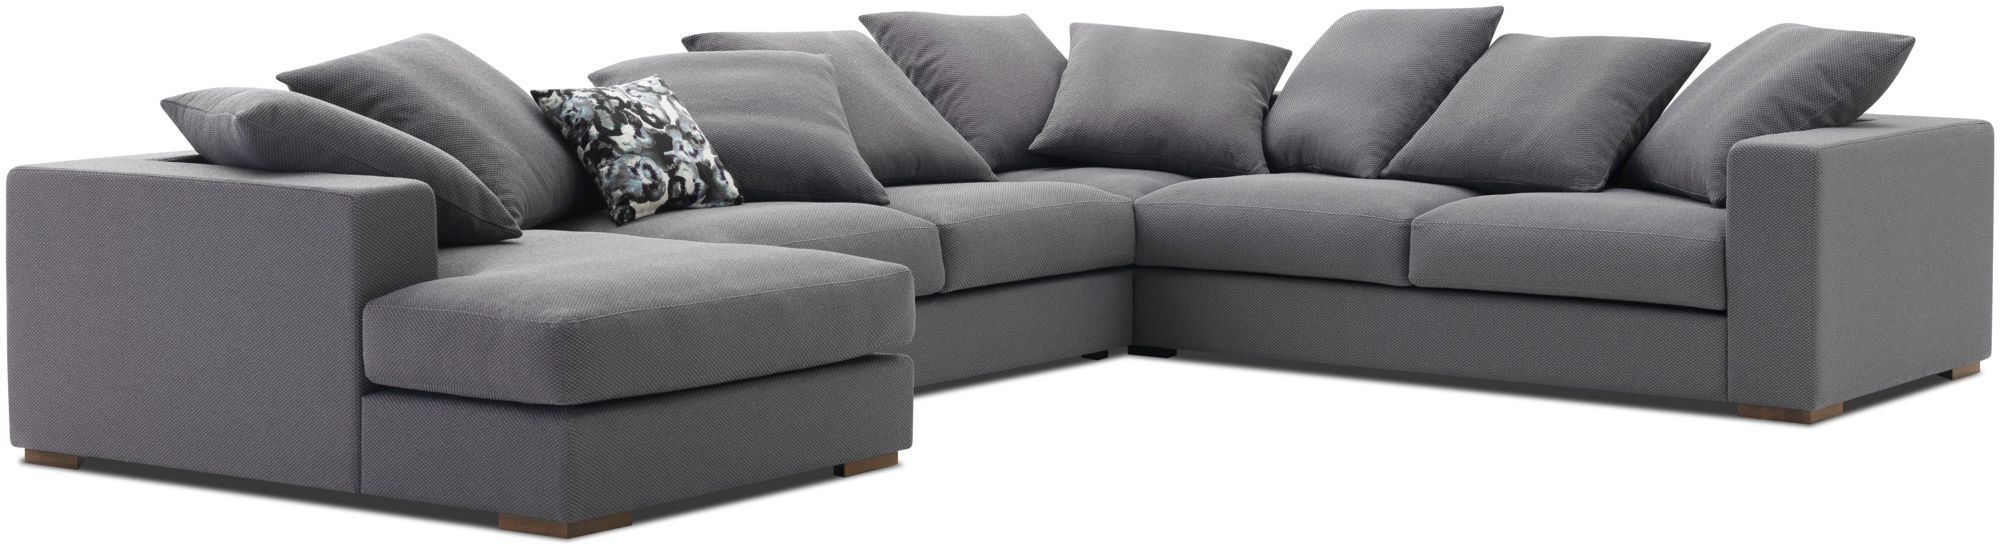 Corner Sofa / Modular / Contemporary / Leather – Cenova – Boconcept For Latest Modular Corner Sofas (View 6 of 15)